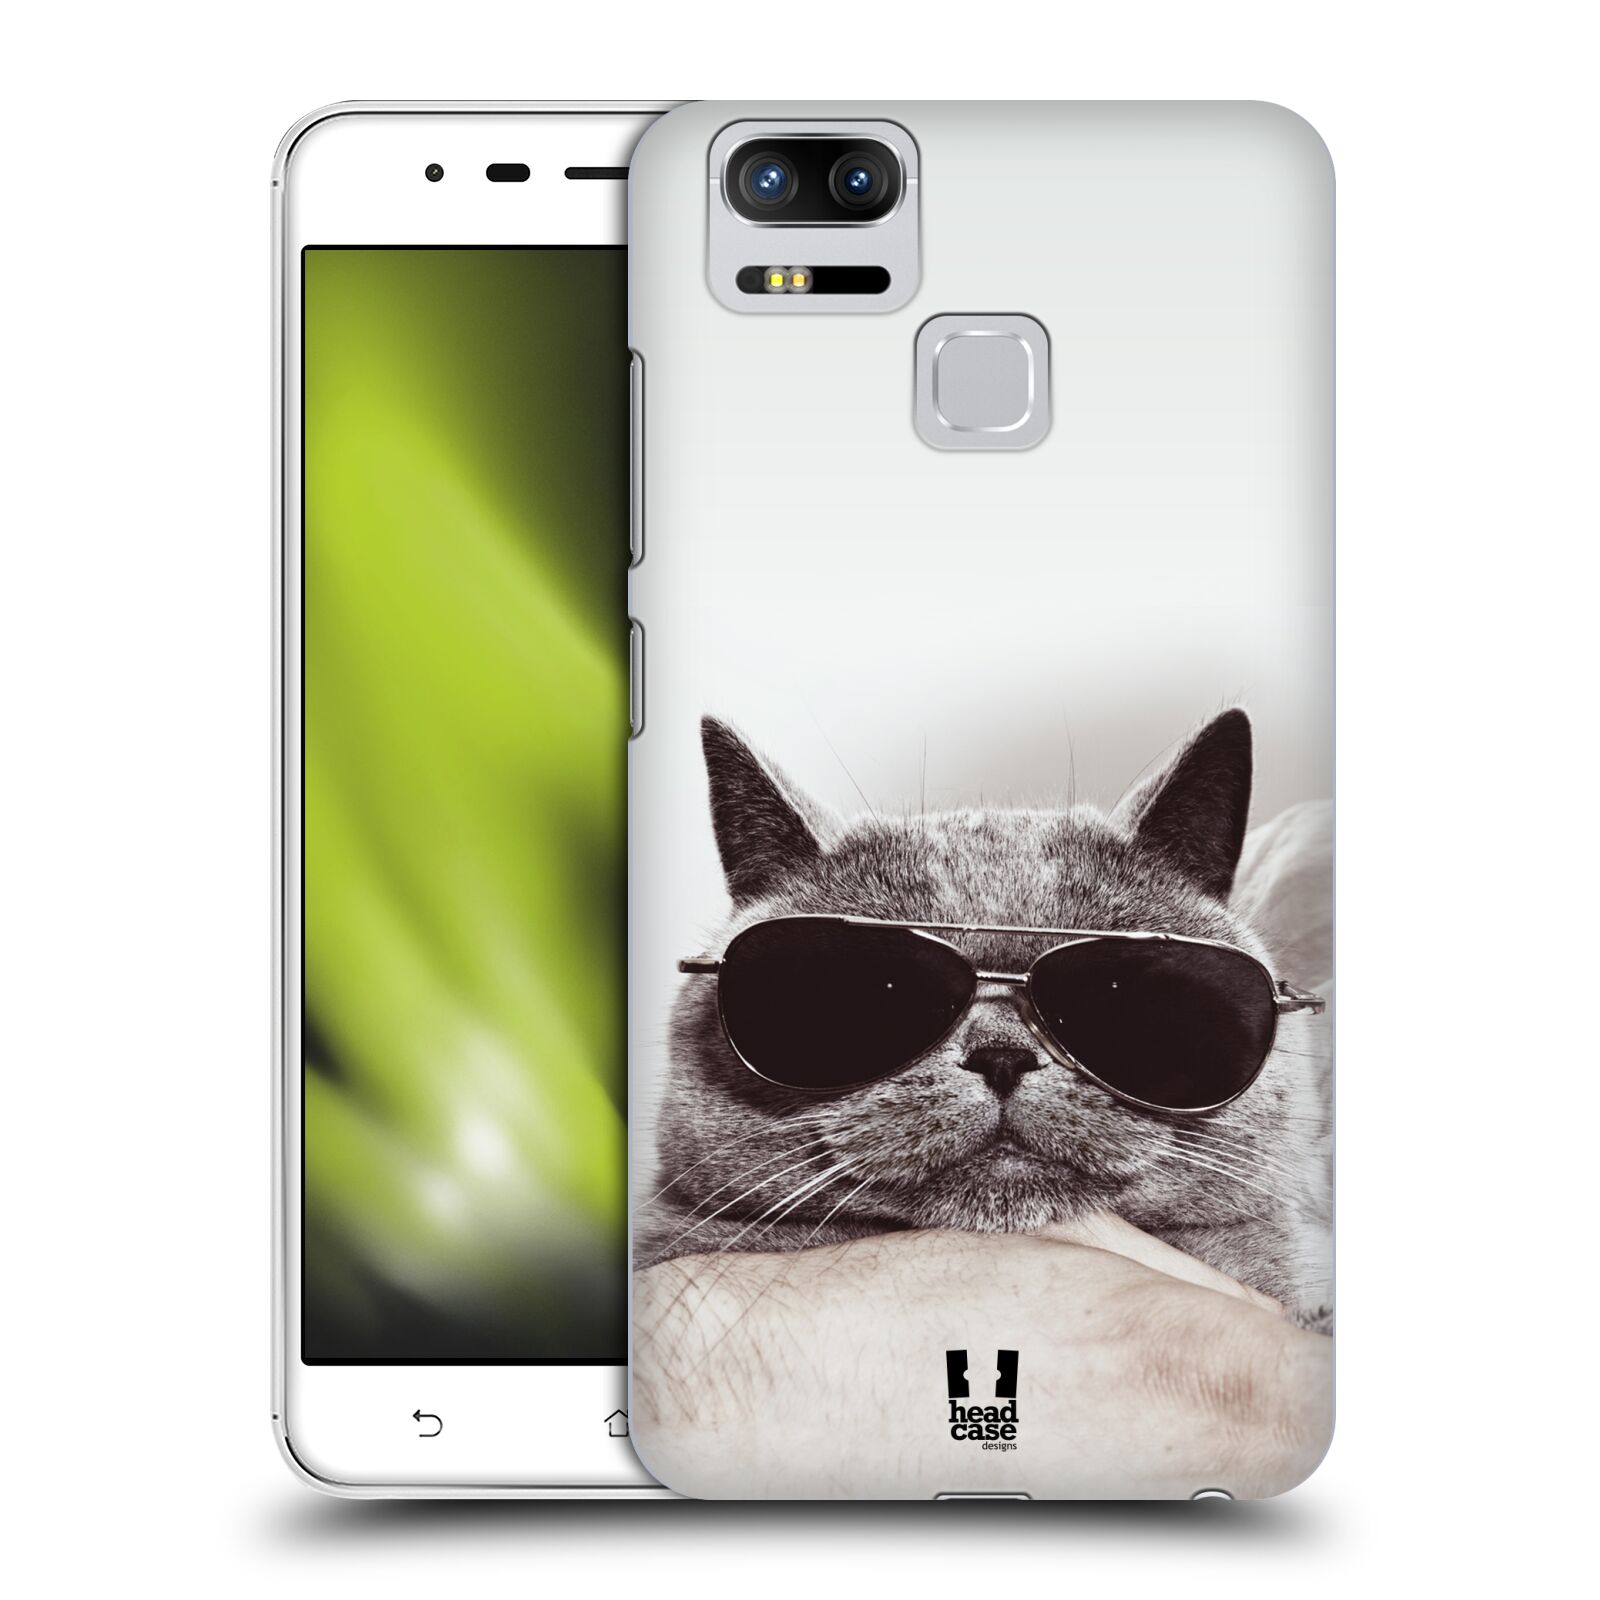 HEAD CASE plastový obal na mobil Asus Zenfone 3 Zoom ZE553KL vzor Kočičky koťata foto Britská kočka v brýlích